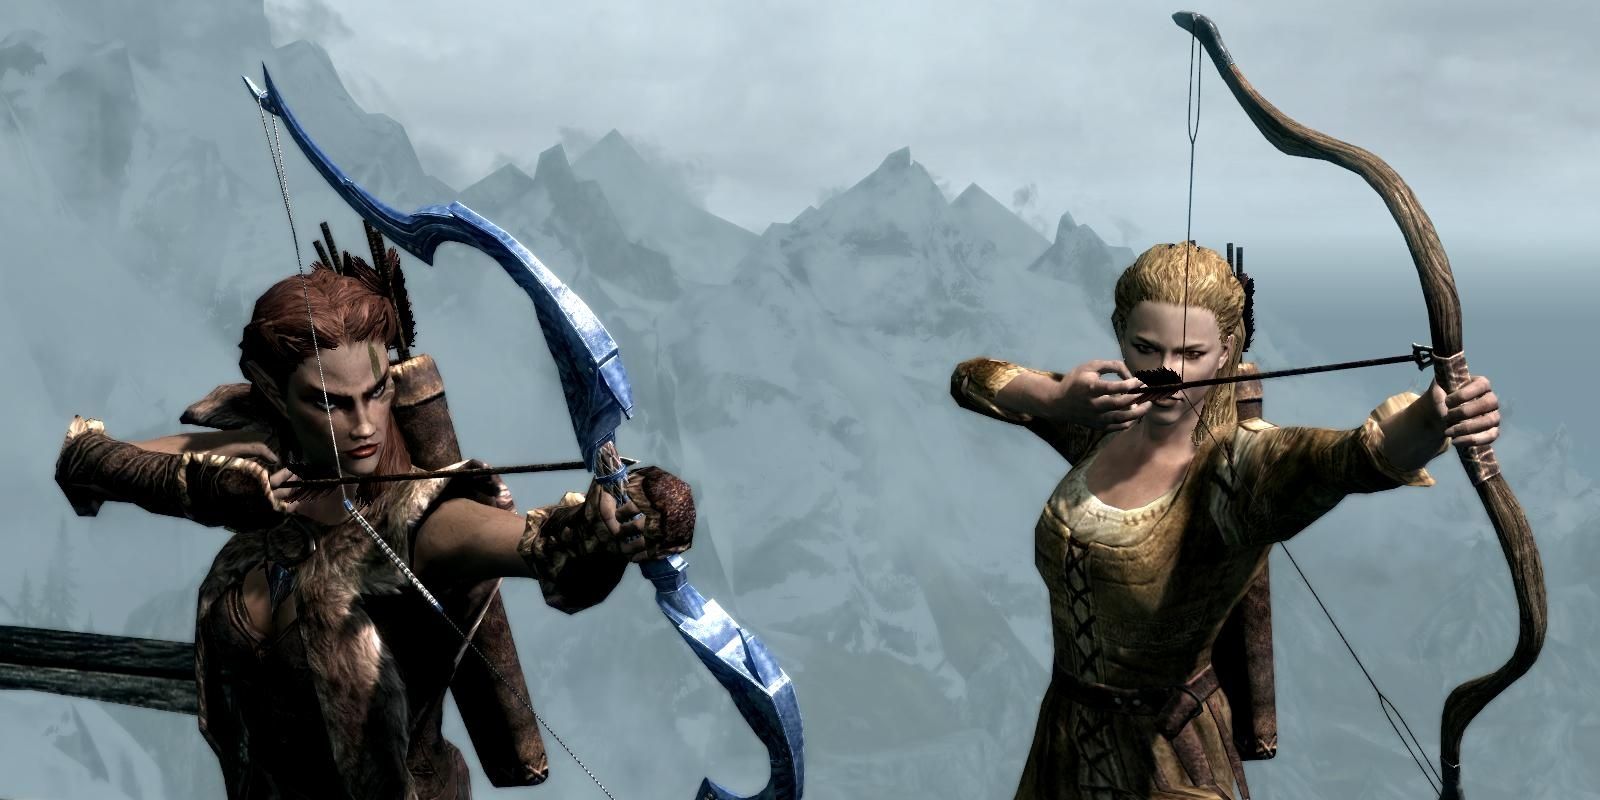 Two archers aim their arrows in Skyrim.